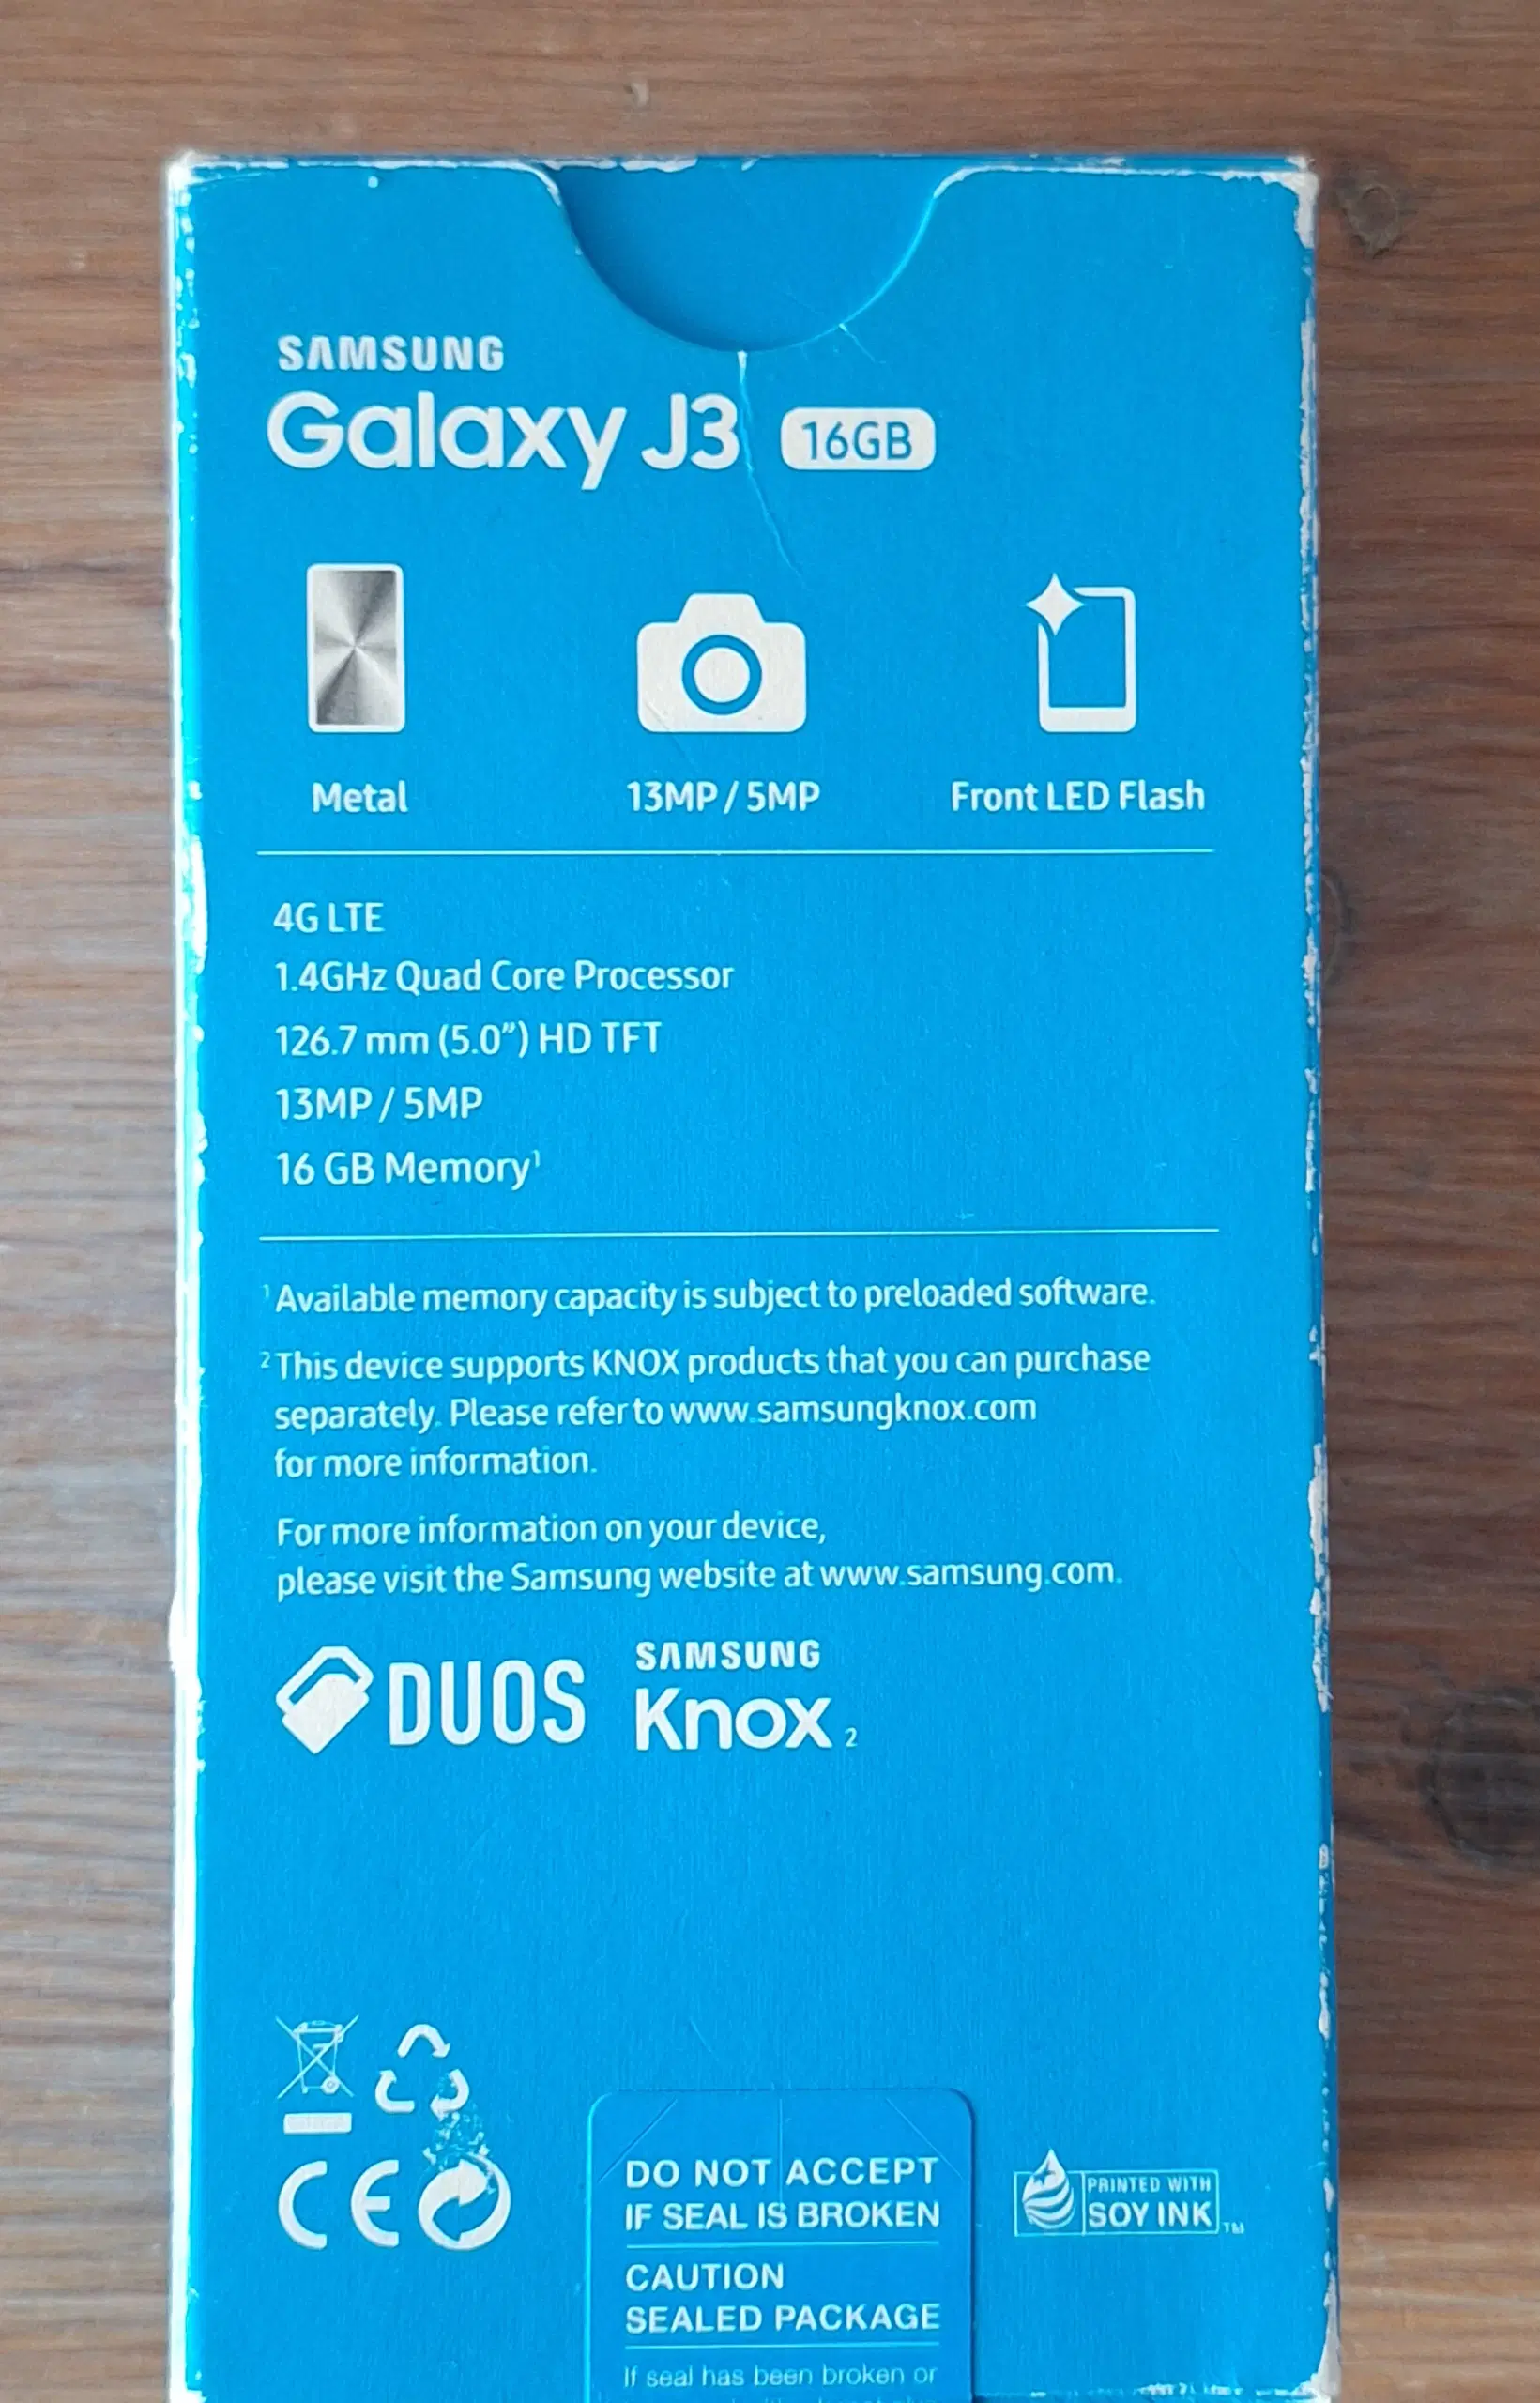 Brugt Samsung Galaxy J3 (2017) mobil sælges